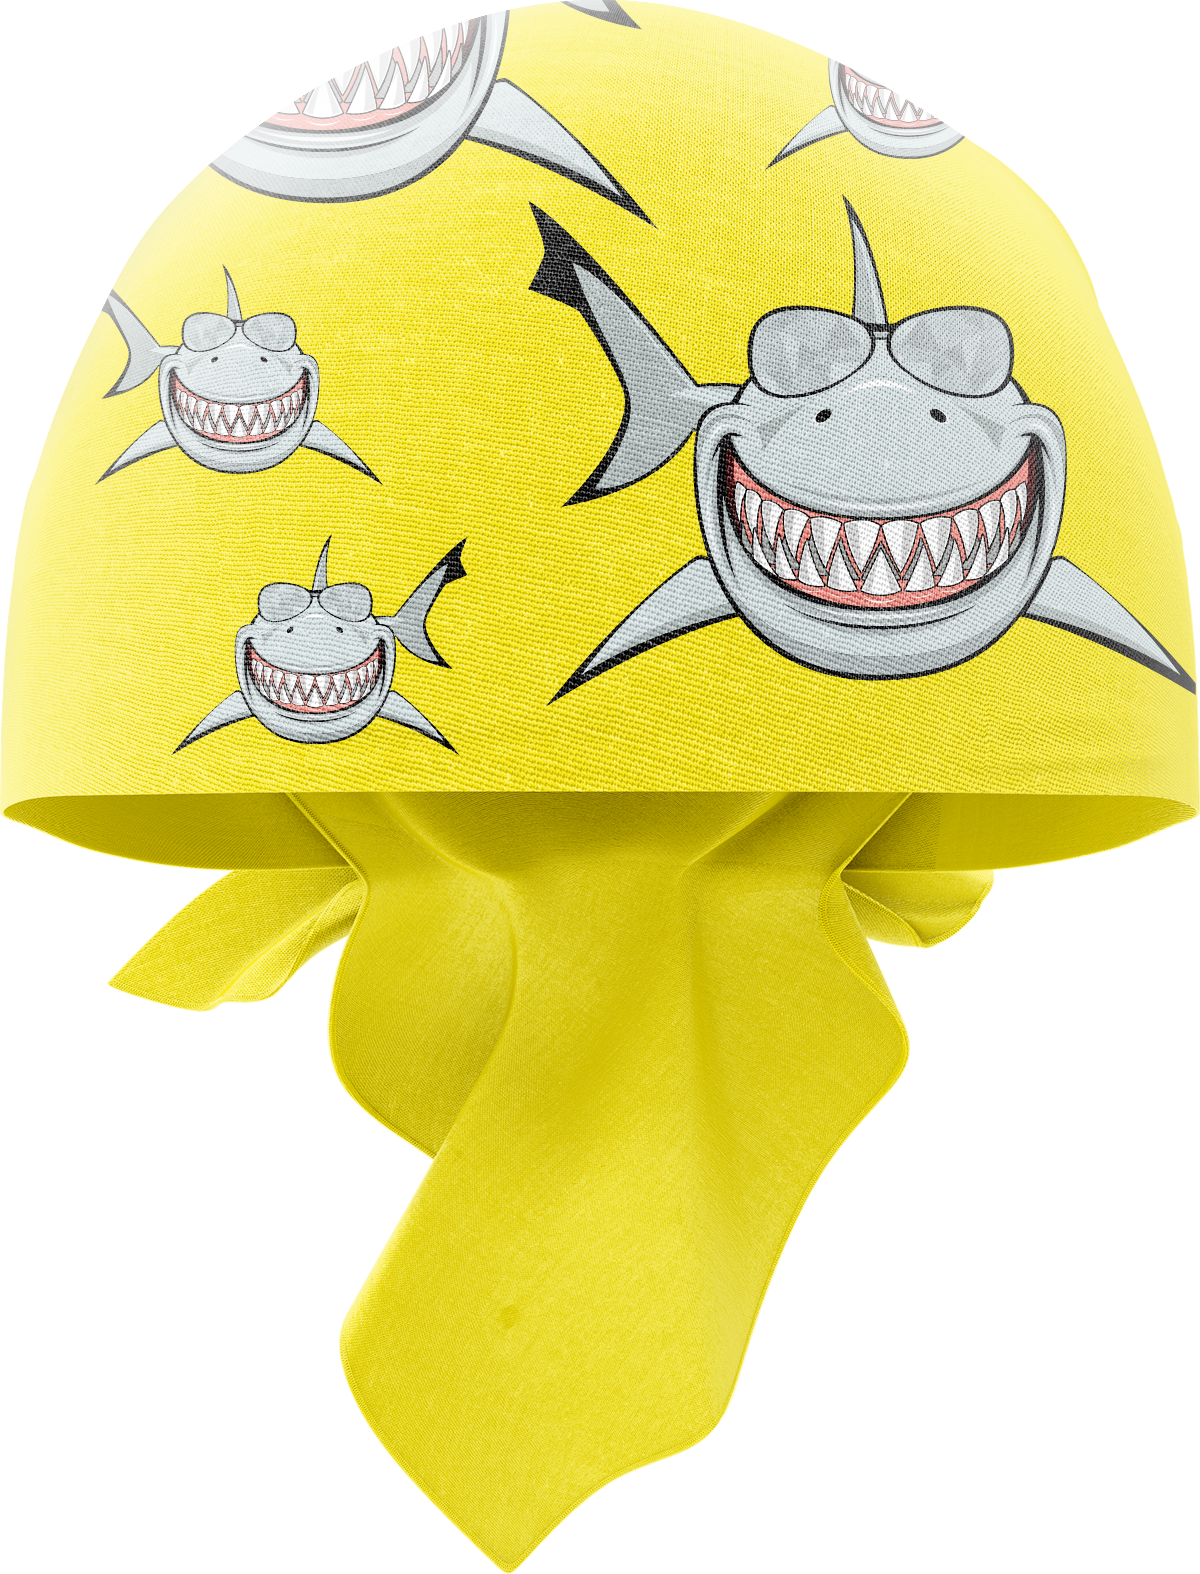 Snazzy Shark Bandannas